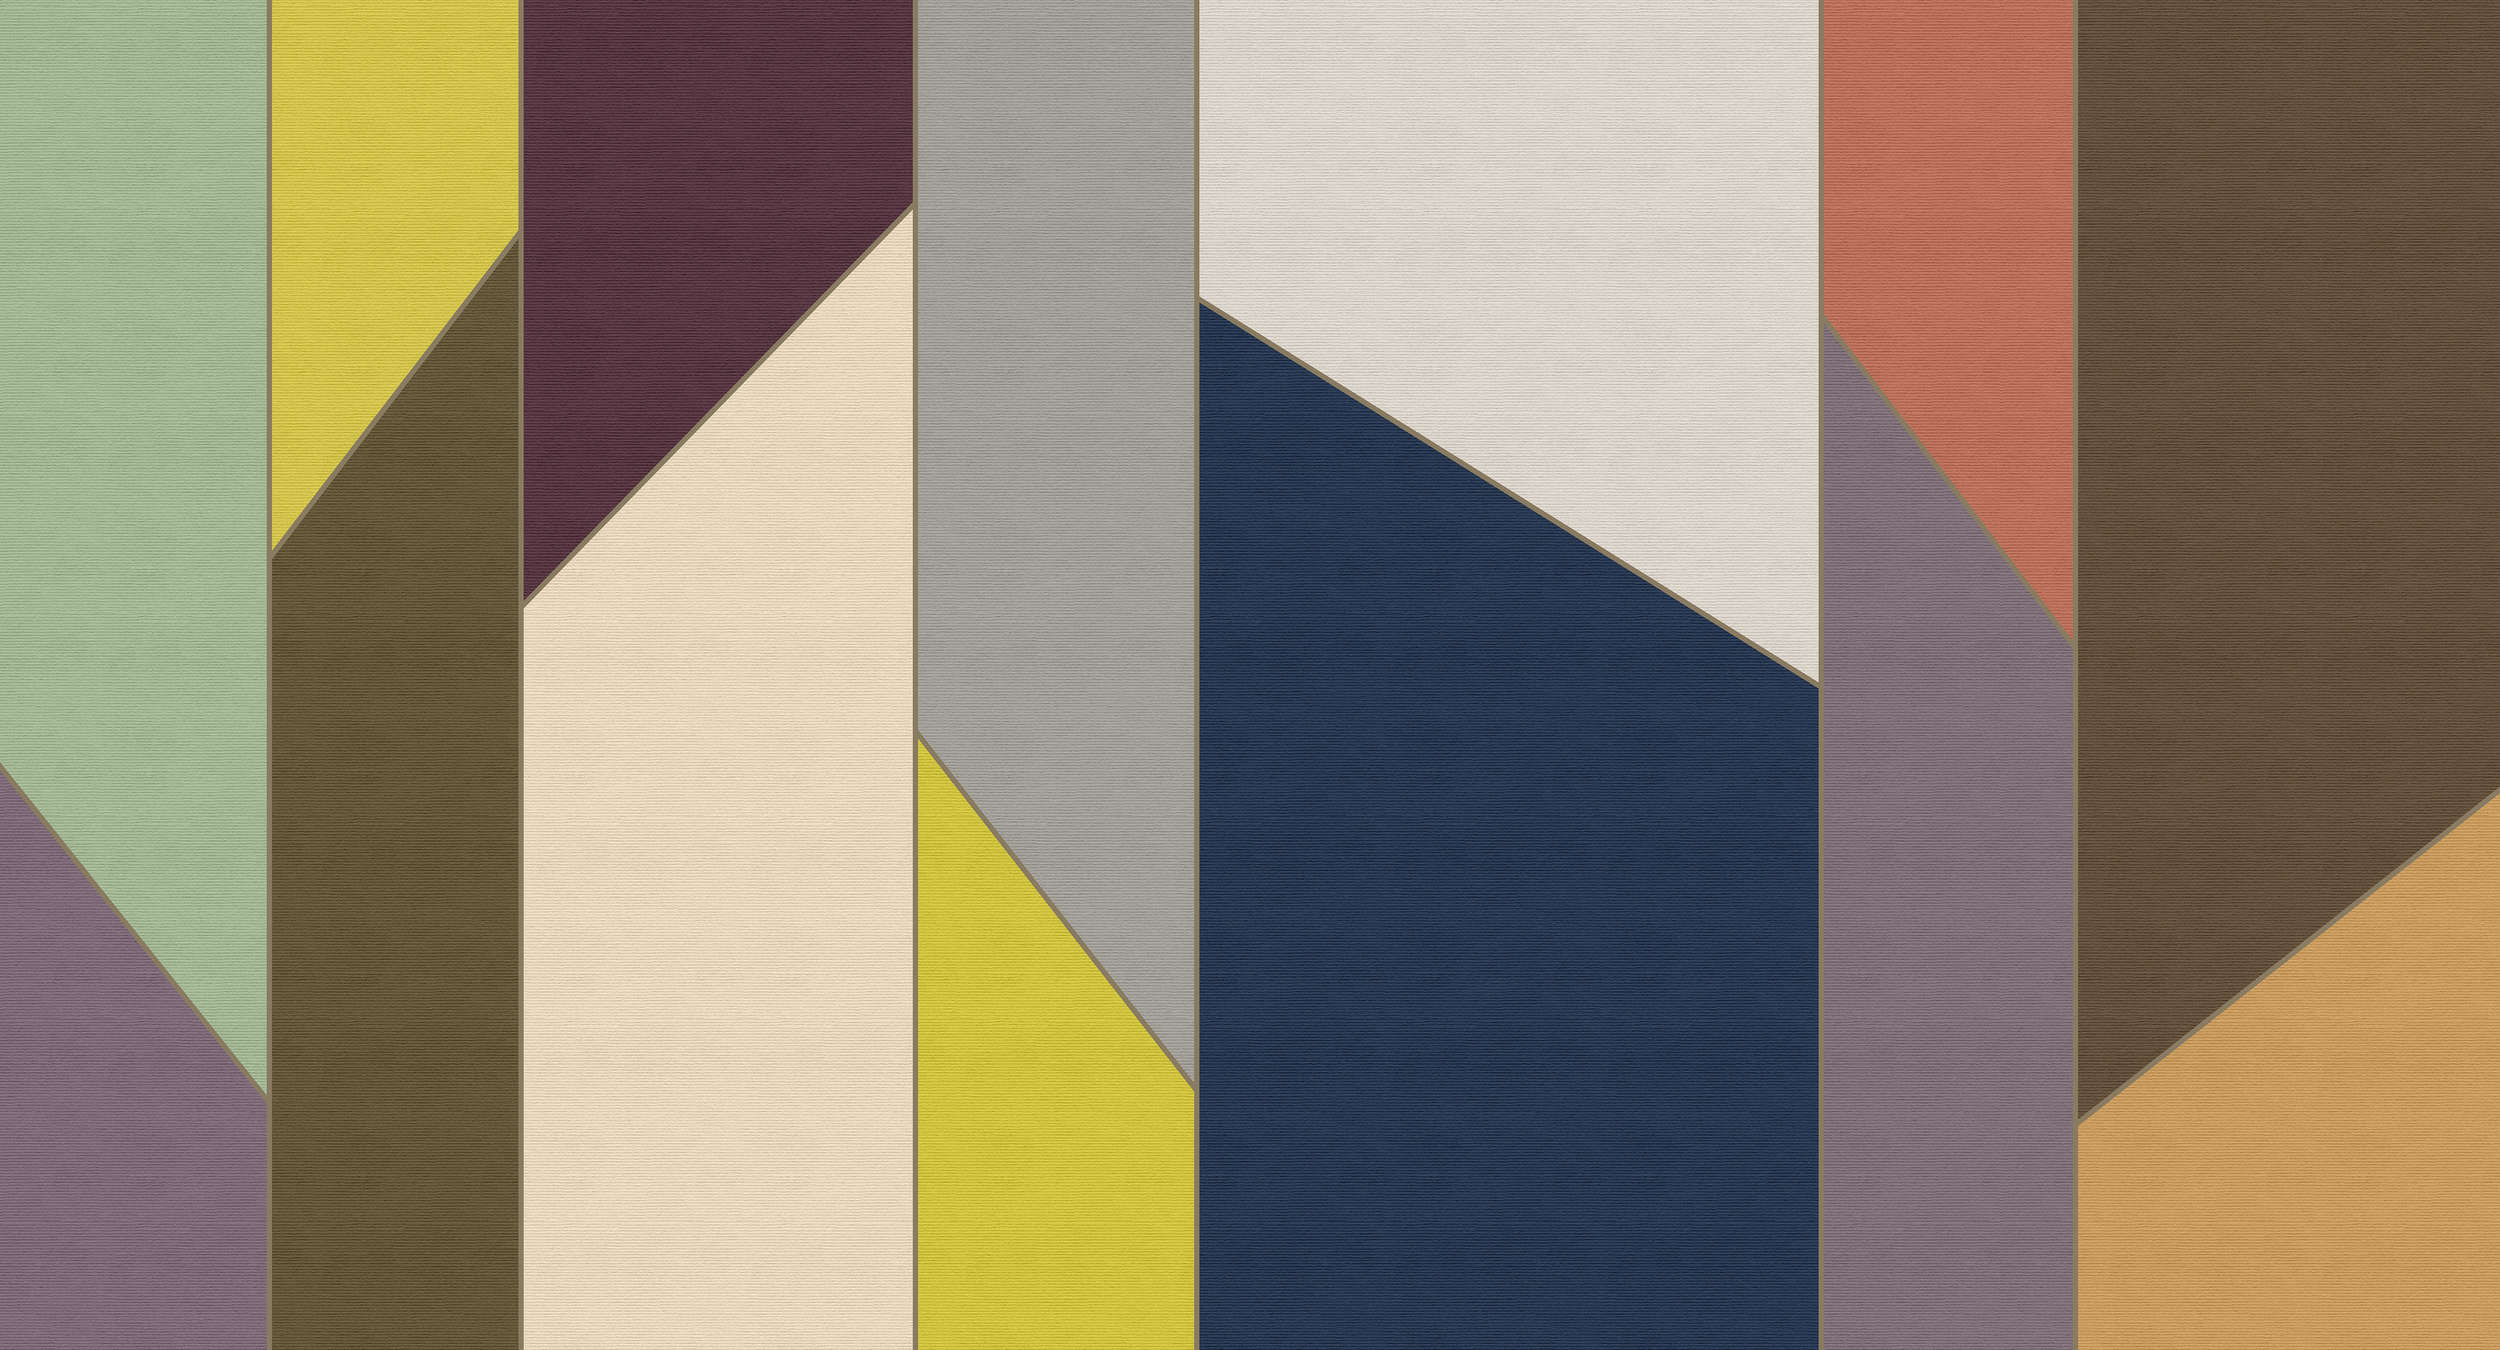             Geometry 4 - Stripe wallpaper colourful retro design in ribbed structure - Beige, Blue | Structure non-woven
        